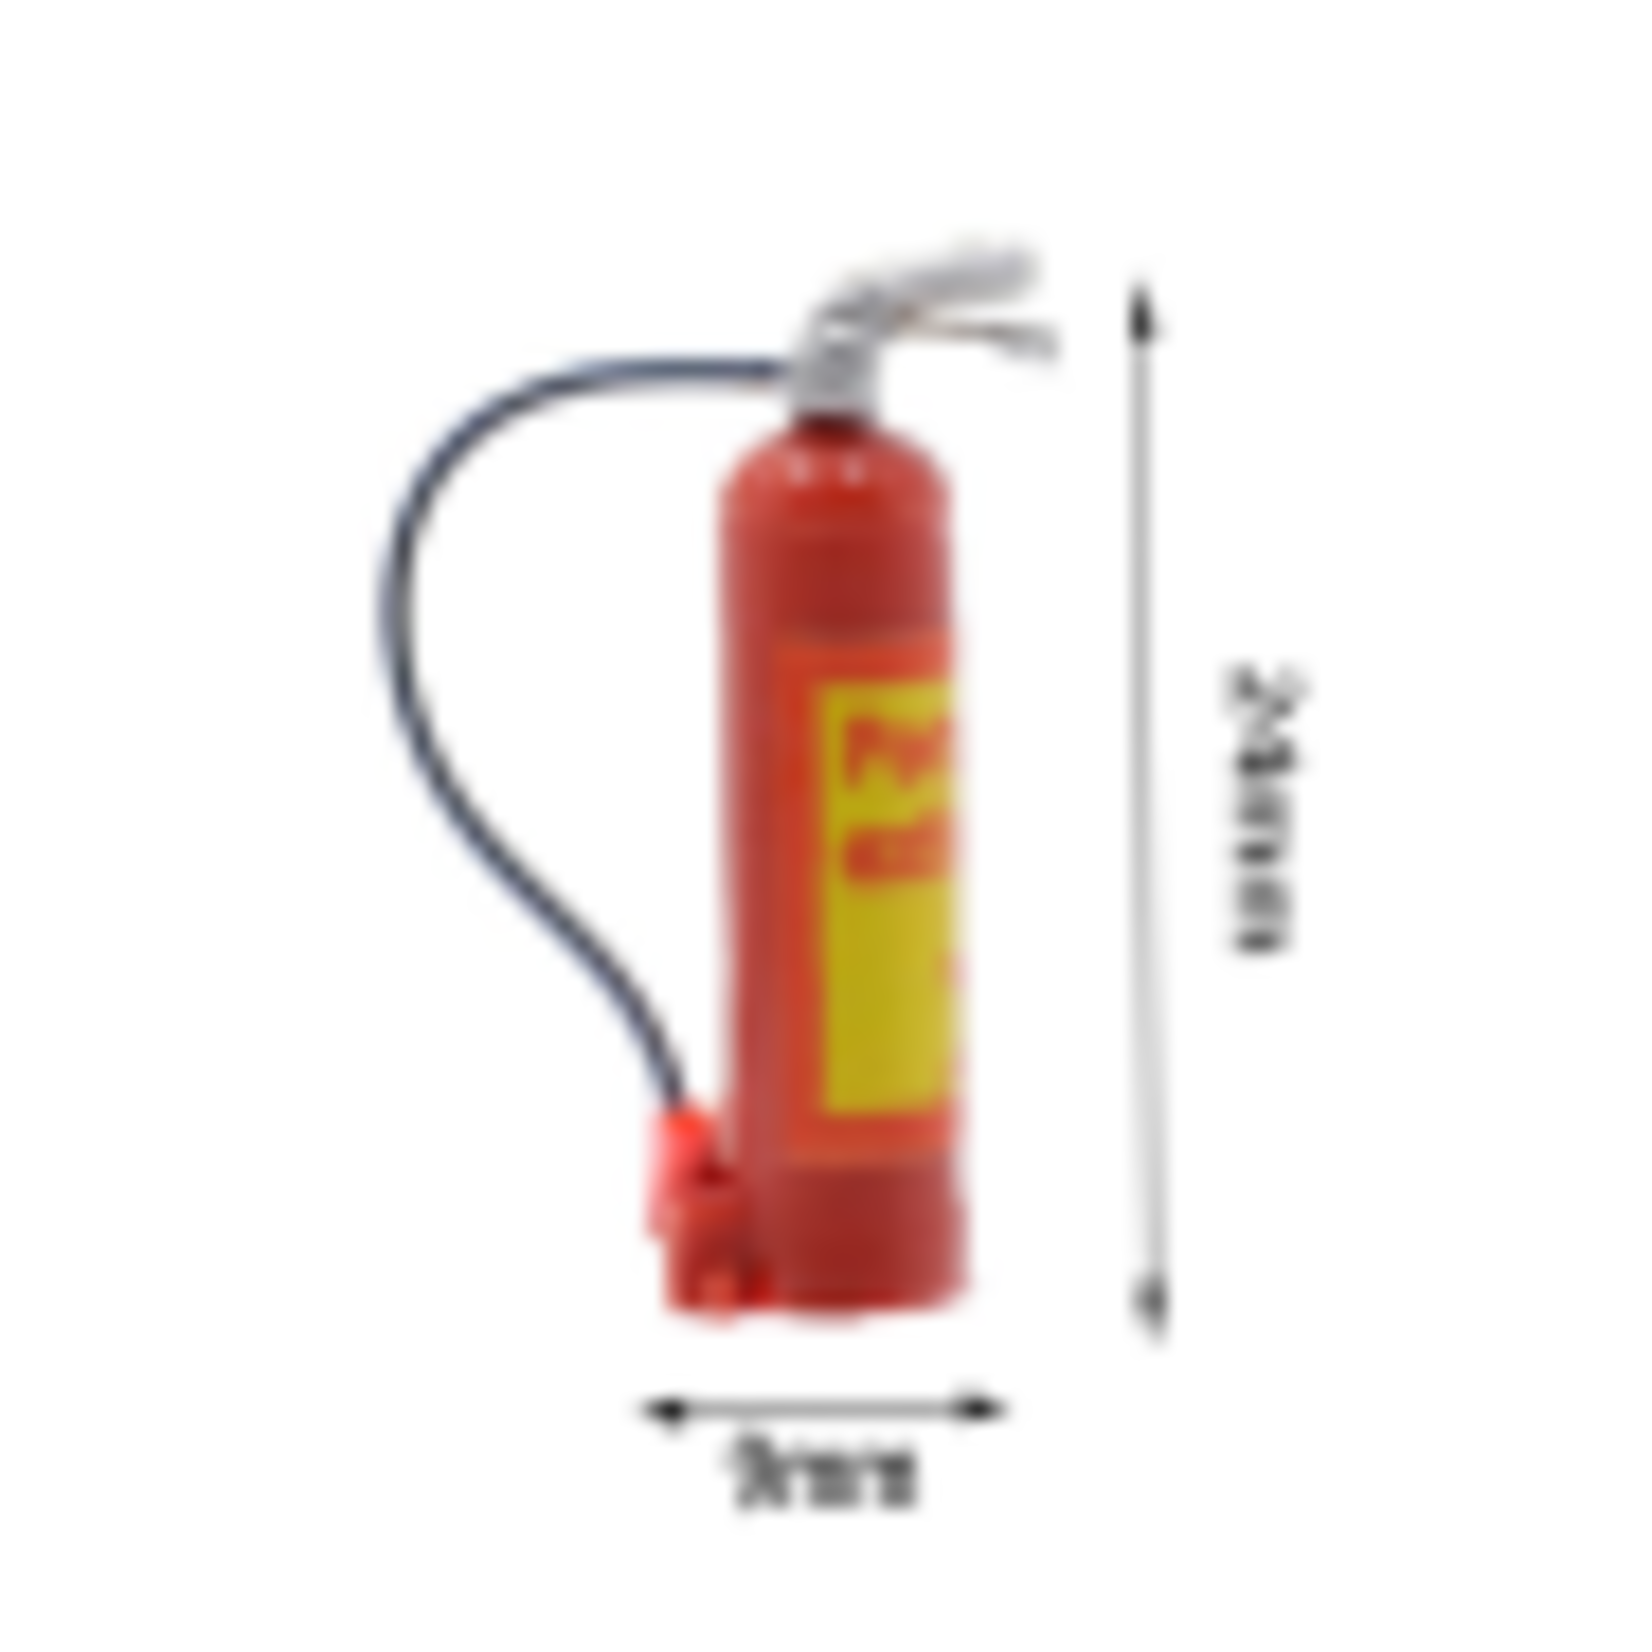 AZTAB AZTAB SCX24 fire extinguisher red